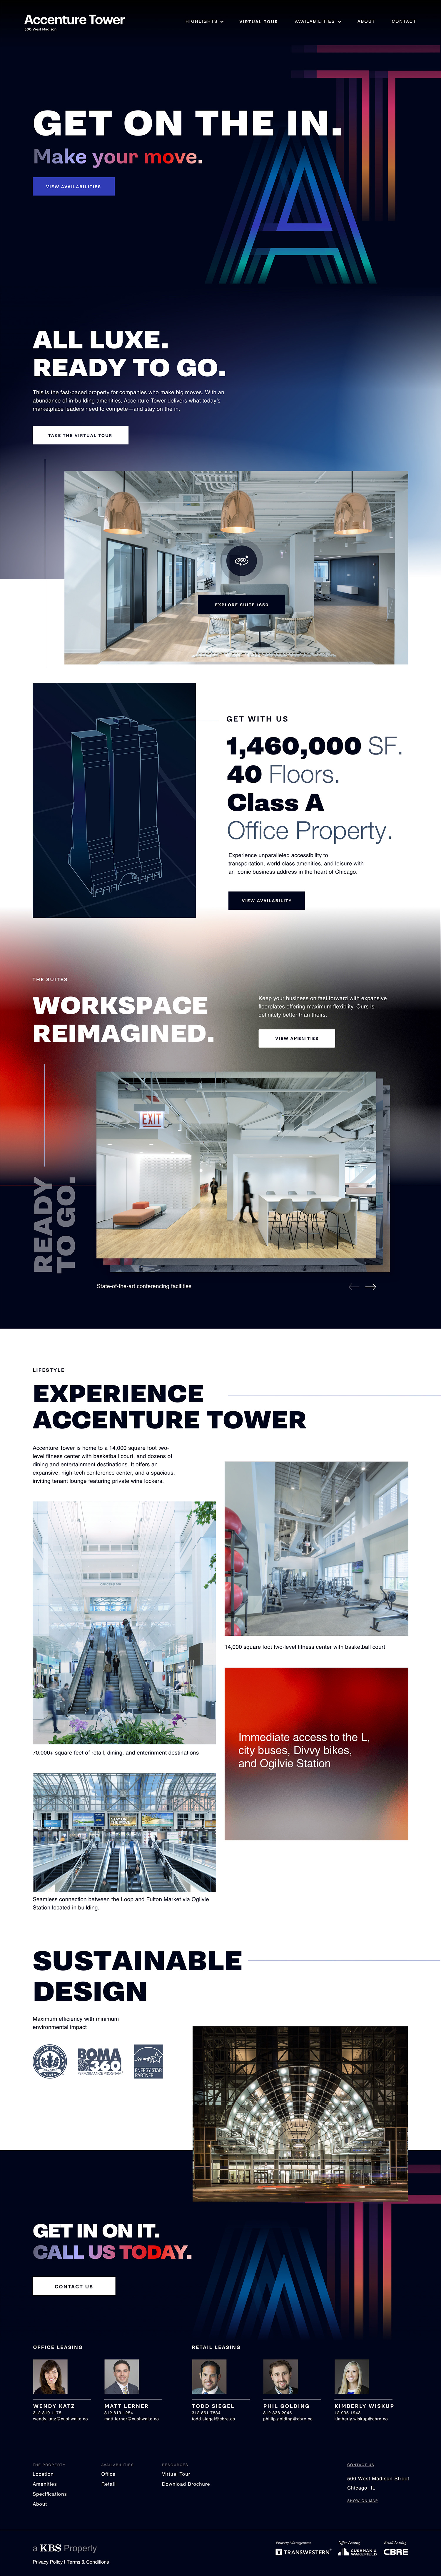 Vega Digital Awards Winner - Accenture Tower Rebranding + Site Design + Build 